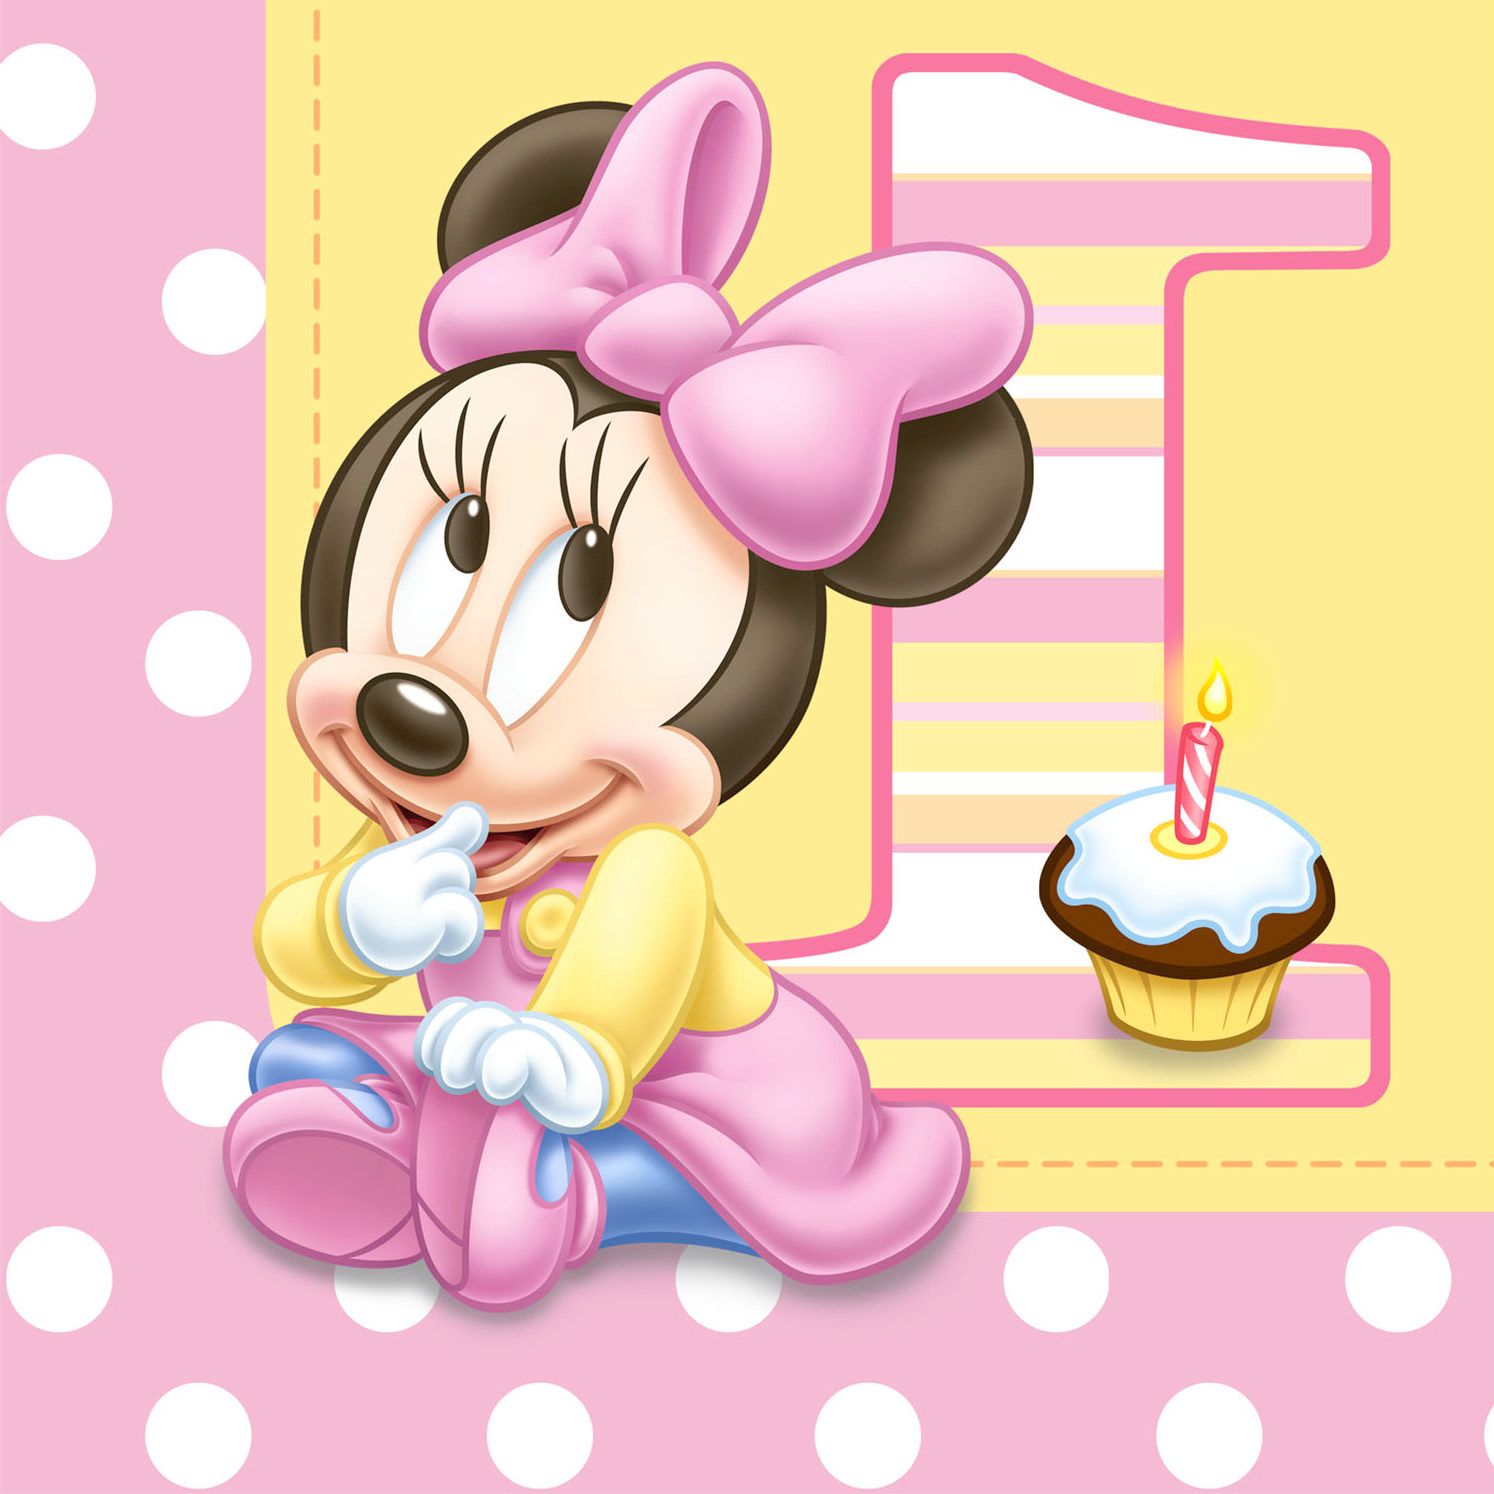 Baby Minnie Background. Minnie Mickey Ears Wallpaper, Minnie Mouse Wallpaper and Mickey Minnie Mouse Wallpaper